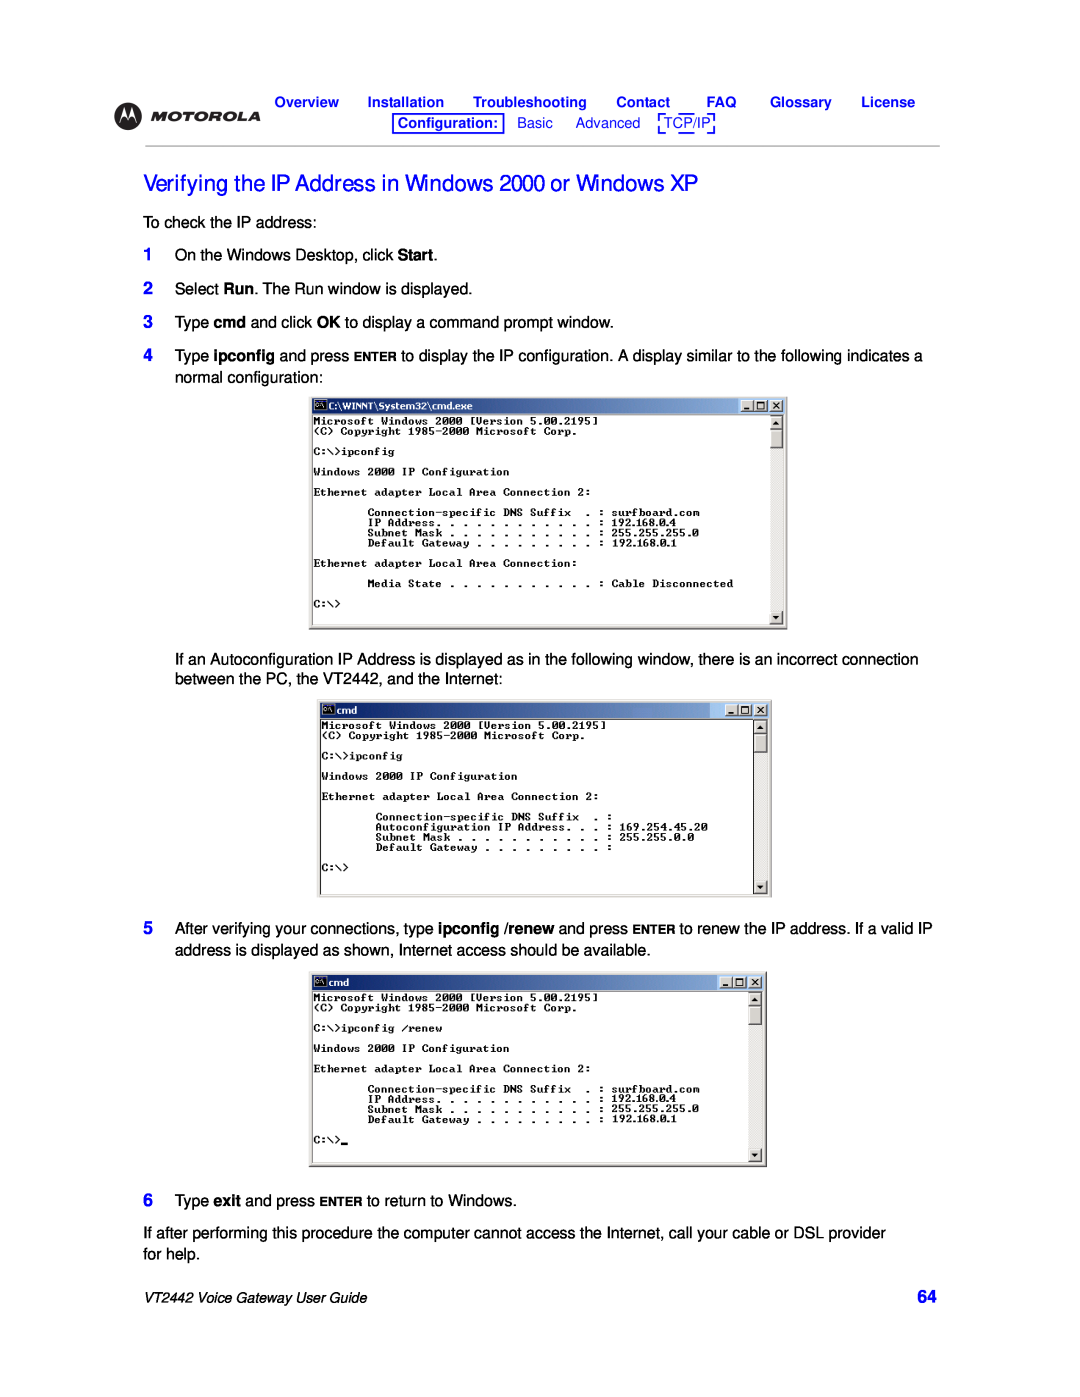 Motorola VT2442 manual Verifying the IP Address in Windows 2000 or Windows XP 